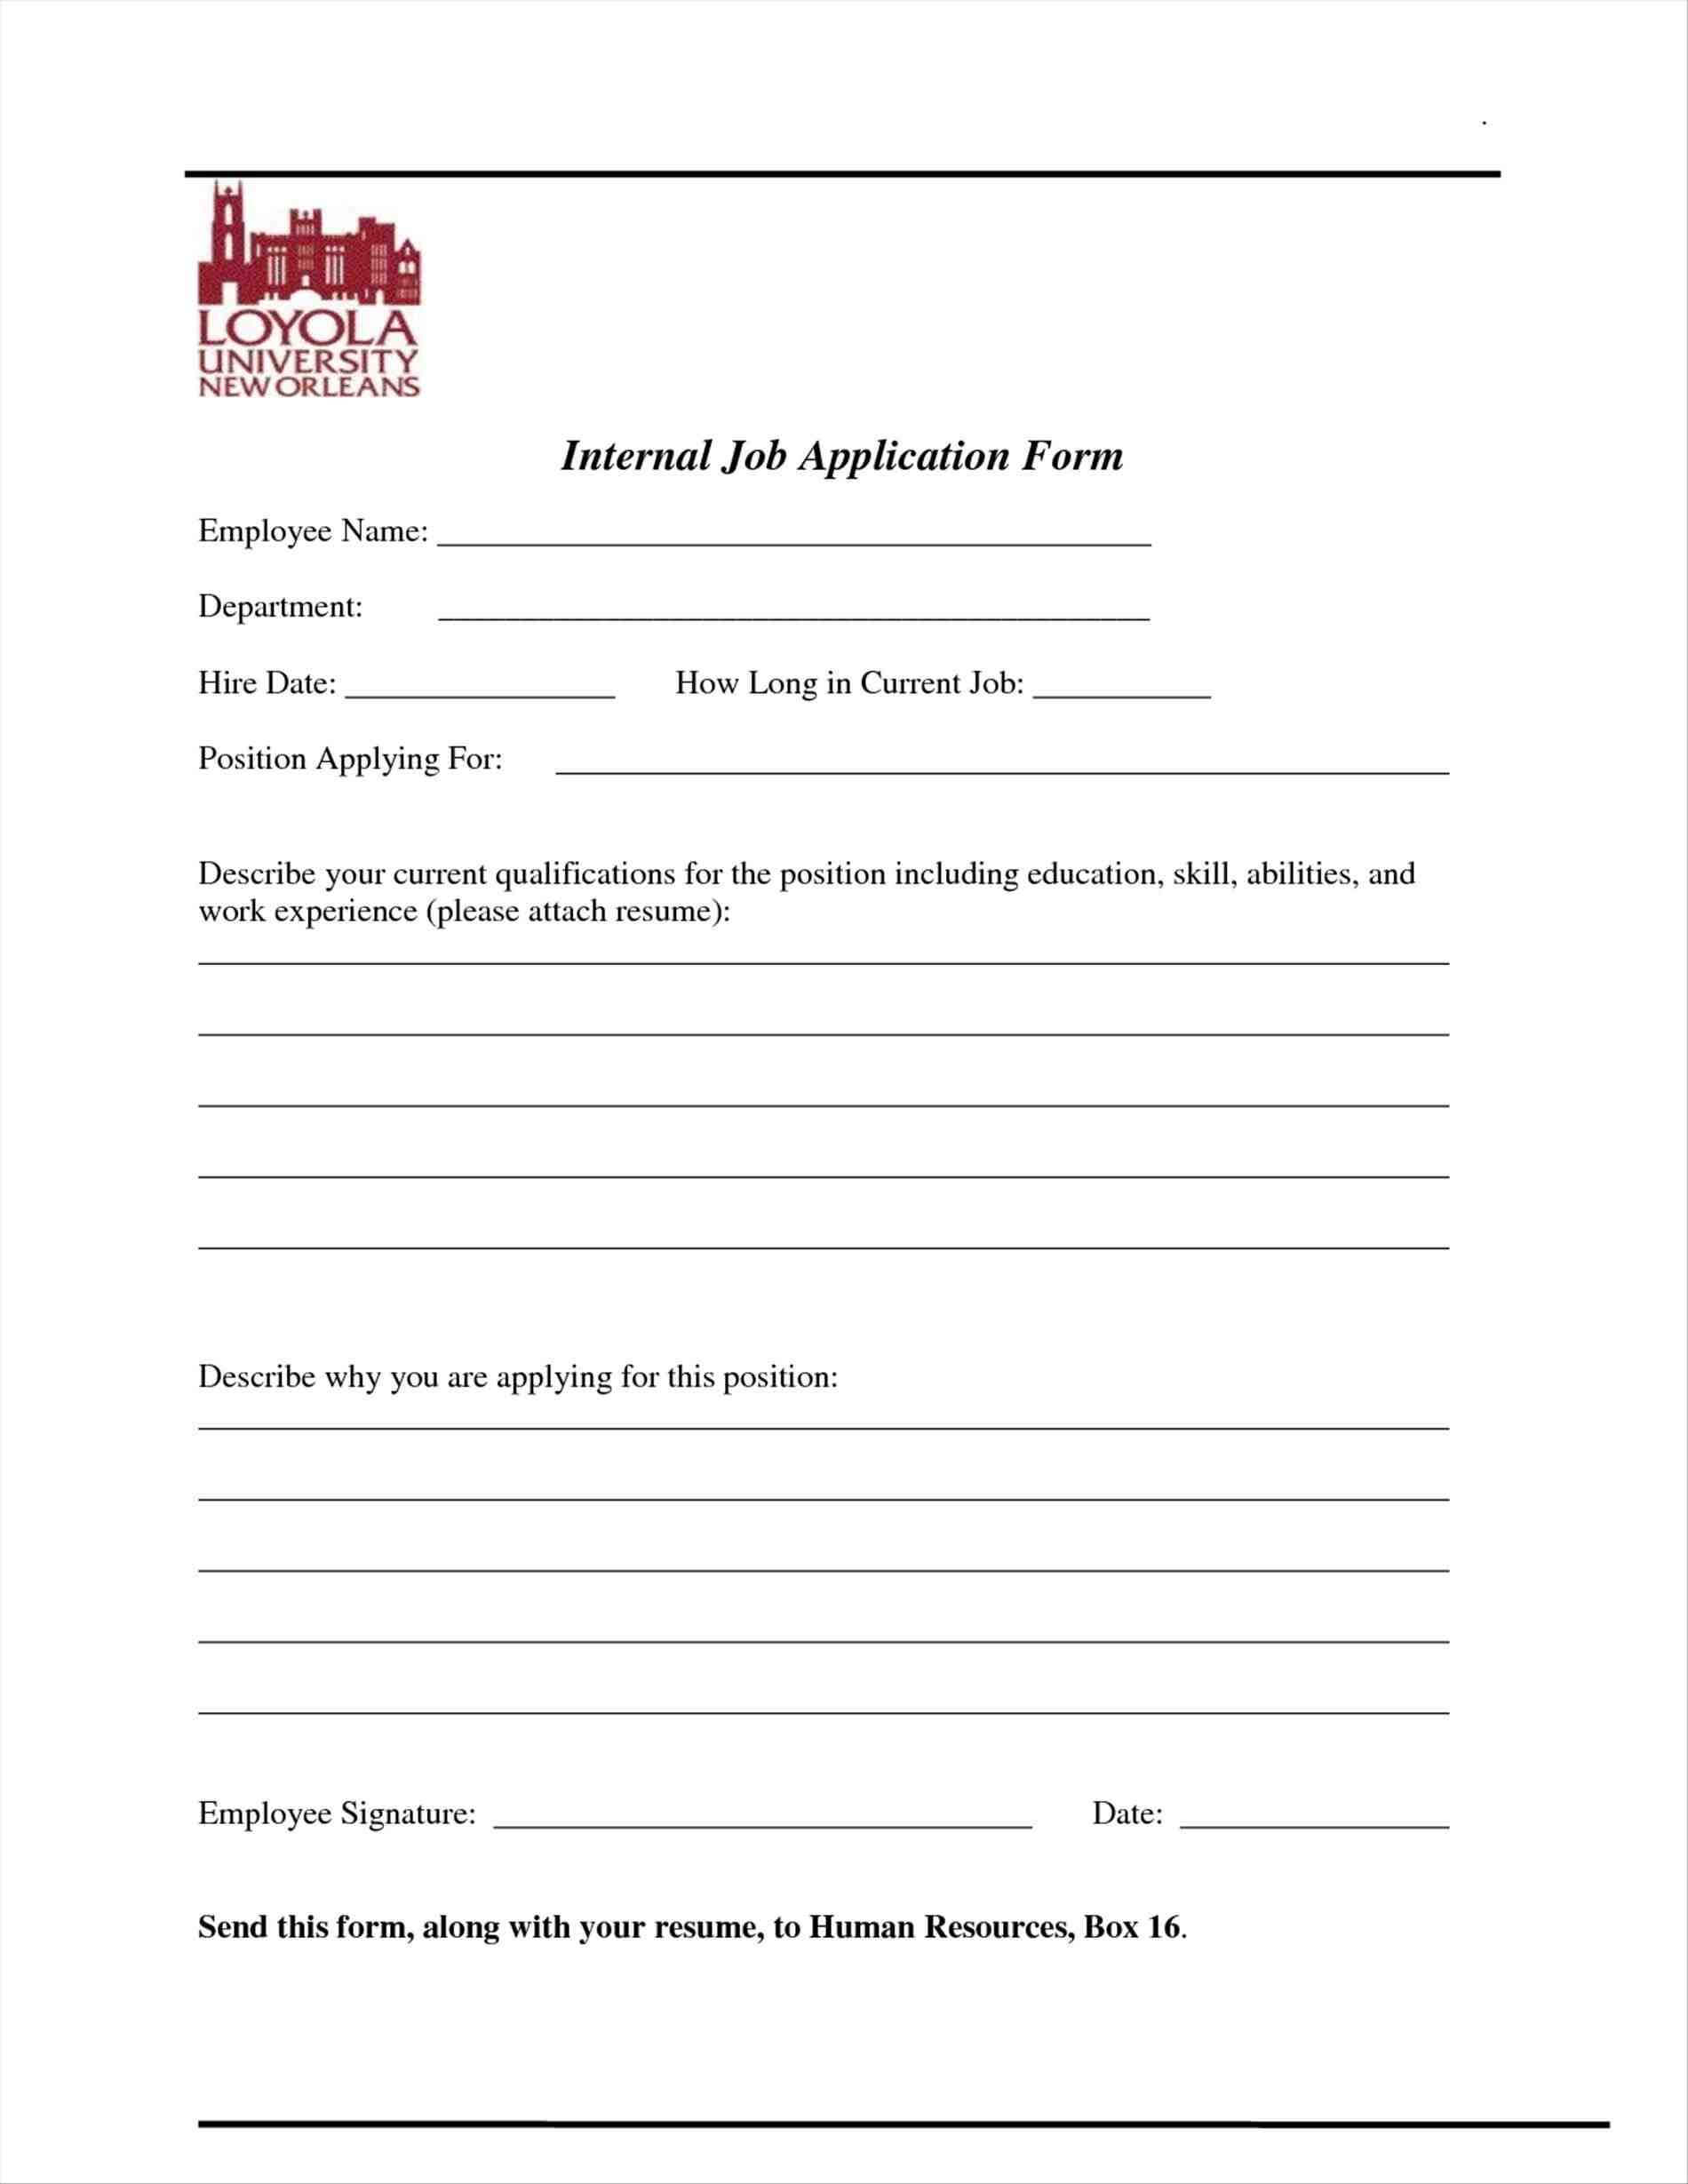 Internal Job Application Form Template Write Happy Ending Regarding Job Application Template Word Document